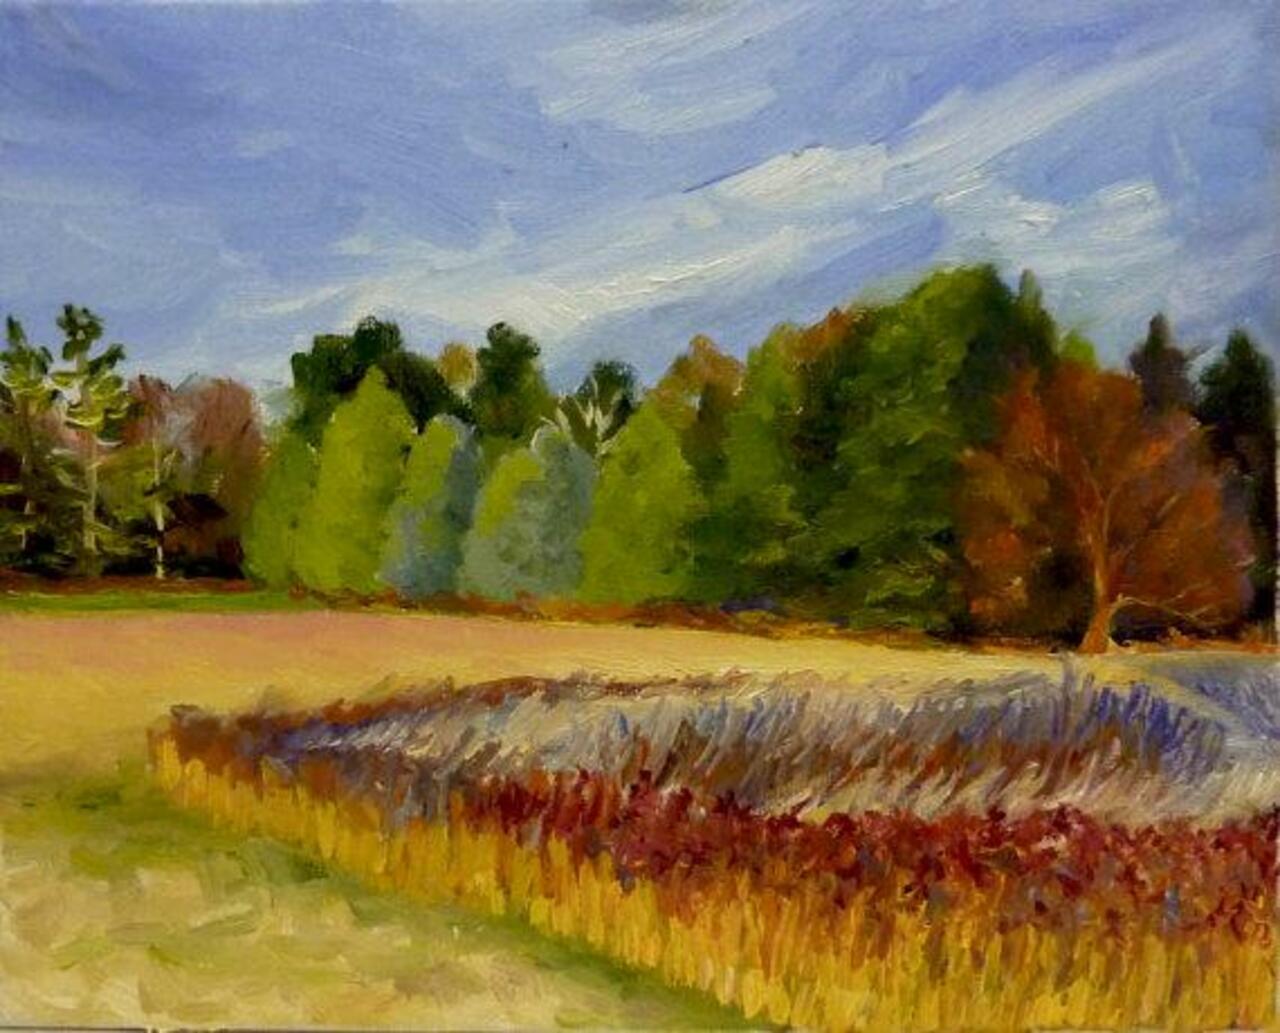 Landscape Oil Painting Fall Field Original Fine Art.. http://arnd.co/4rhb8 #etsy #art http://t.co/rxrhzz5E7P